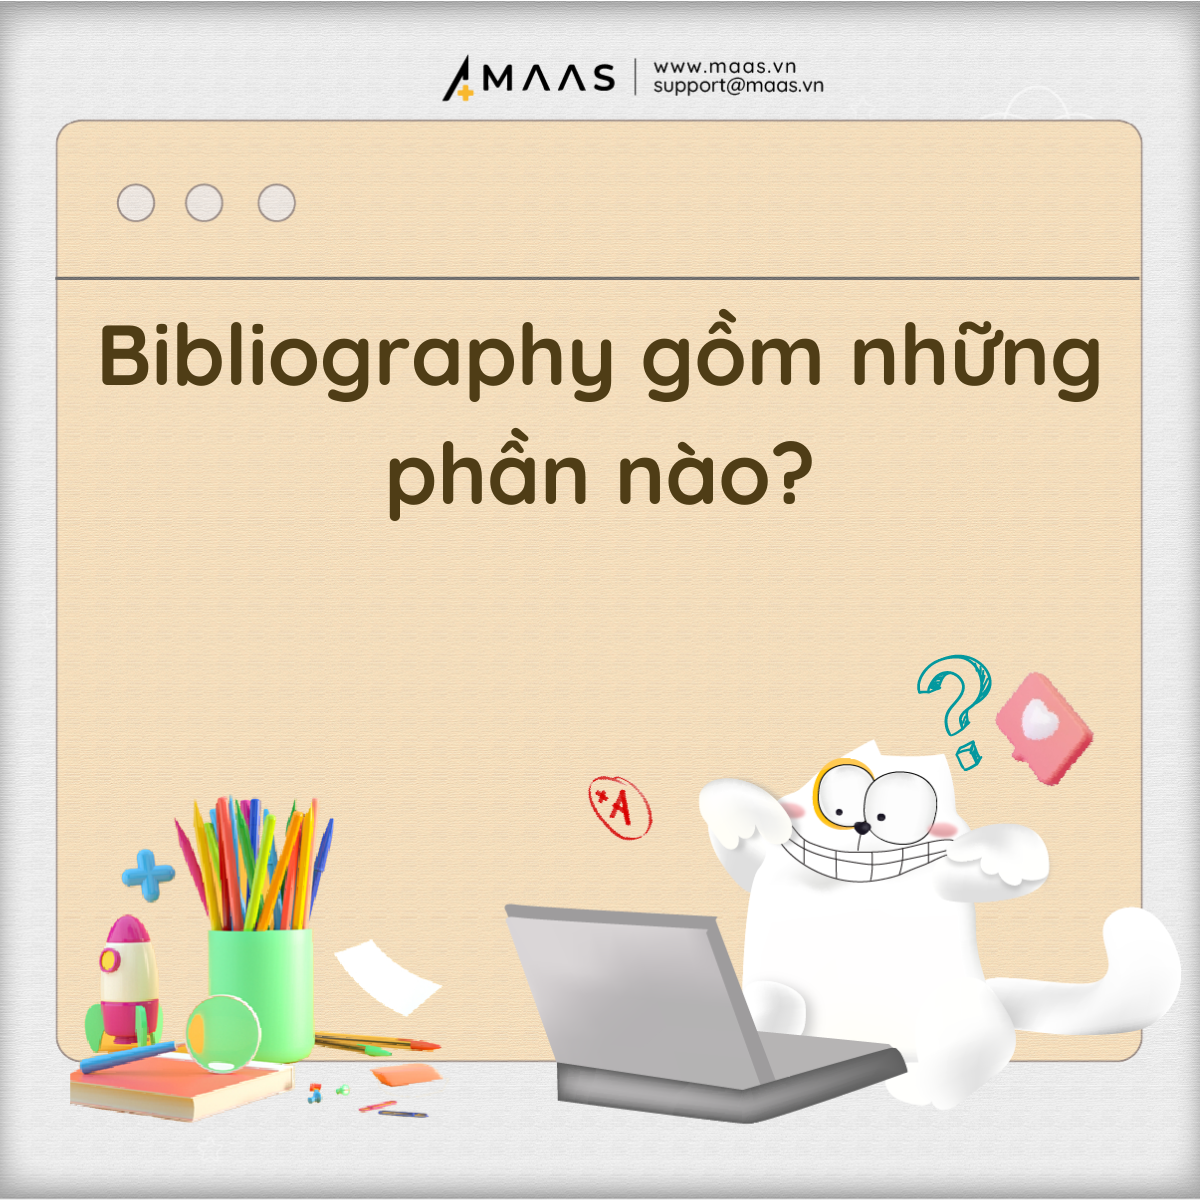 Bibliography 